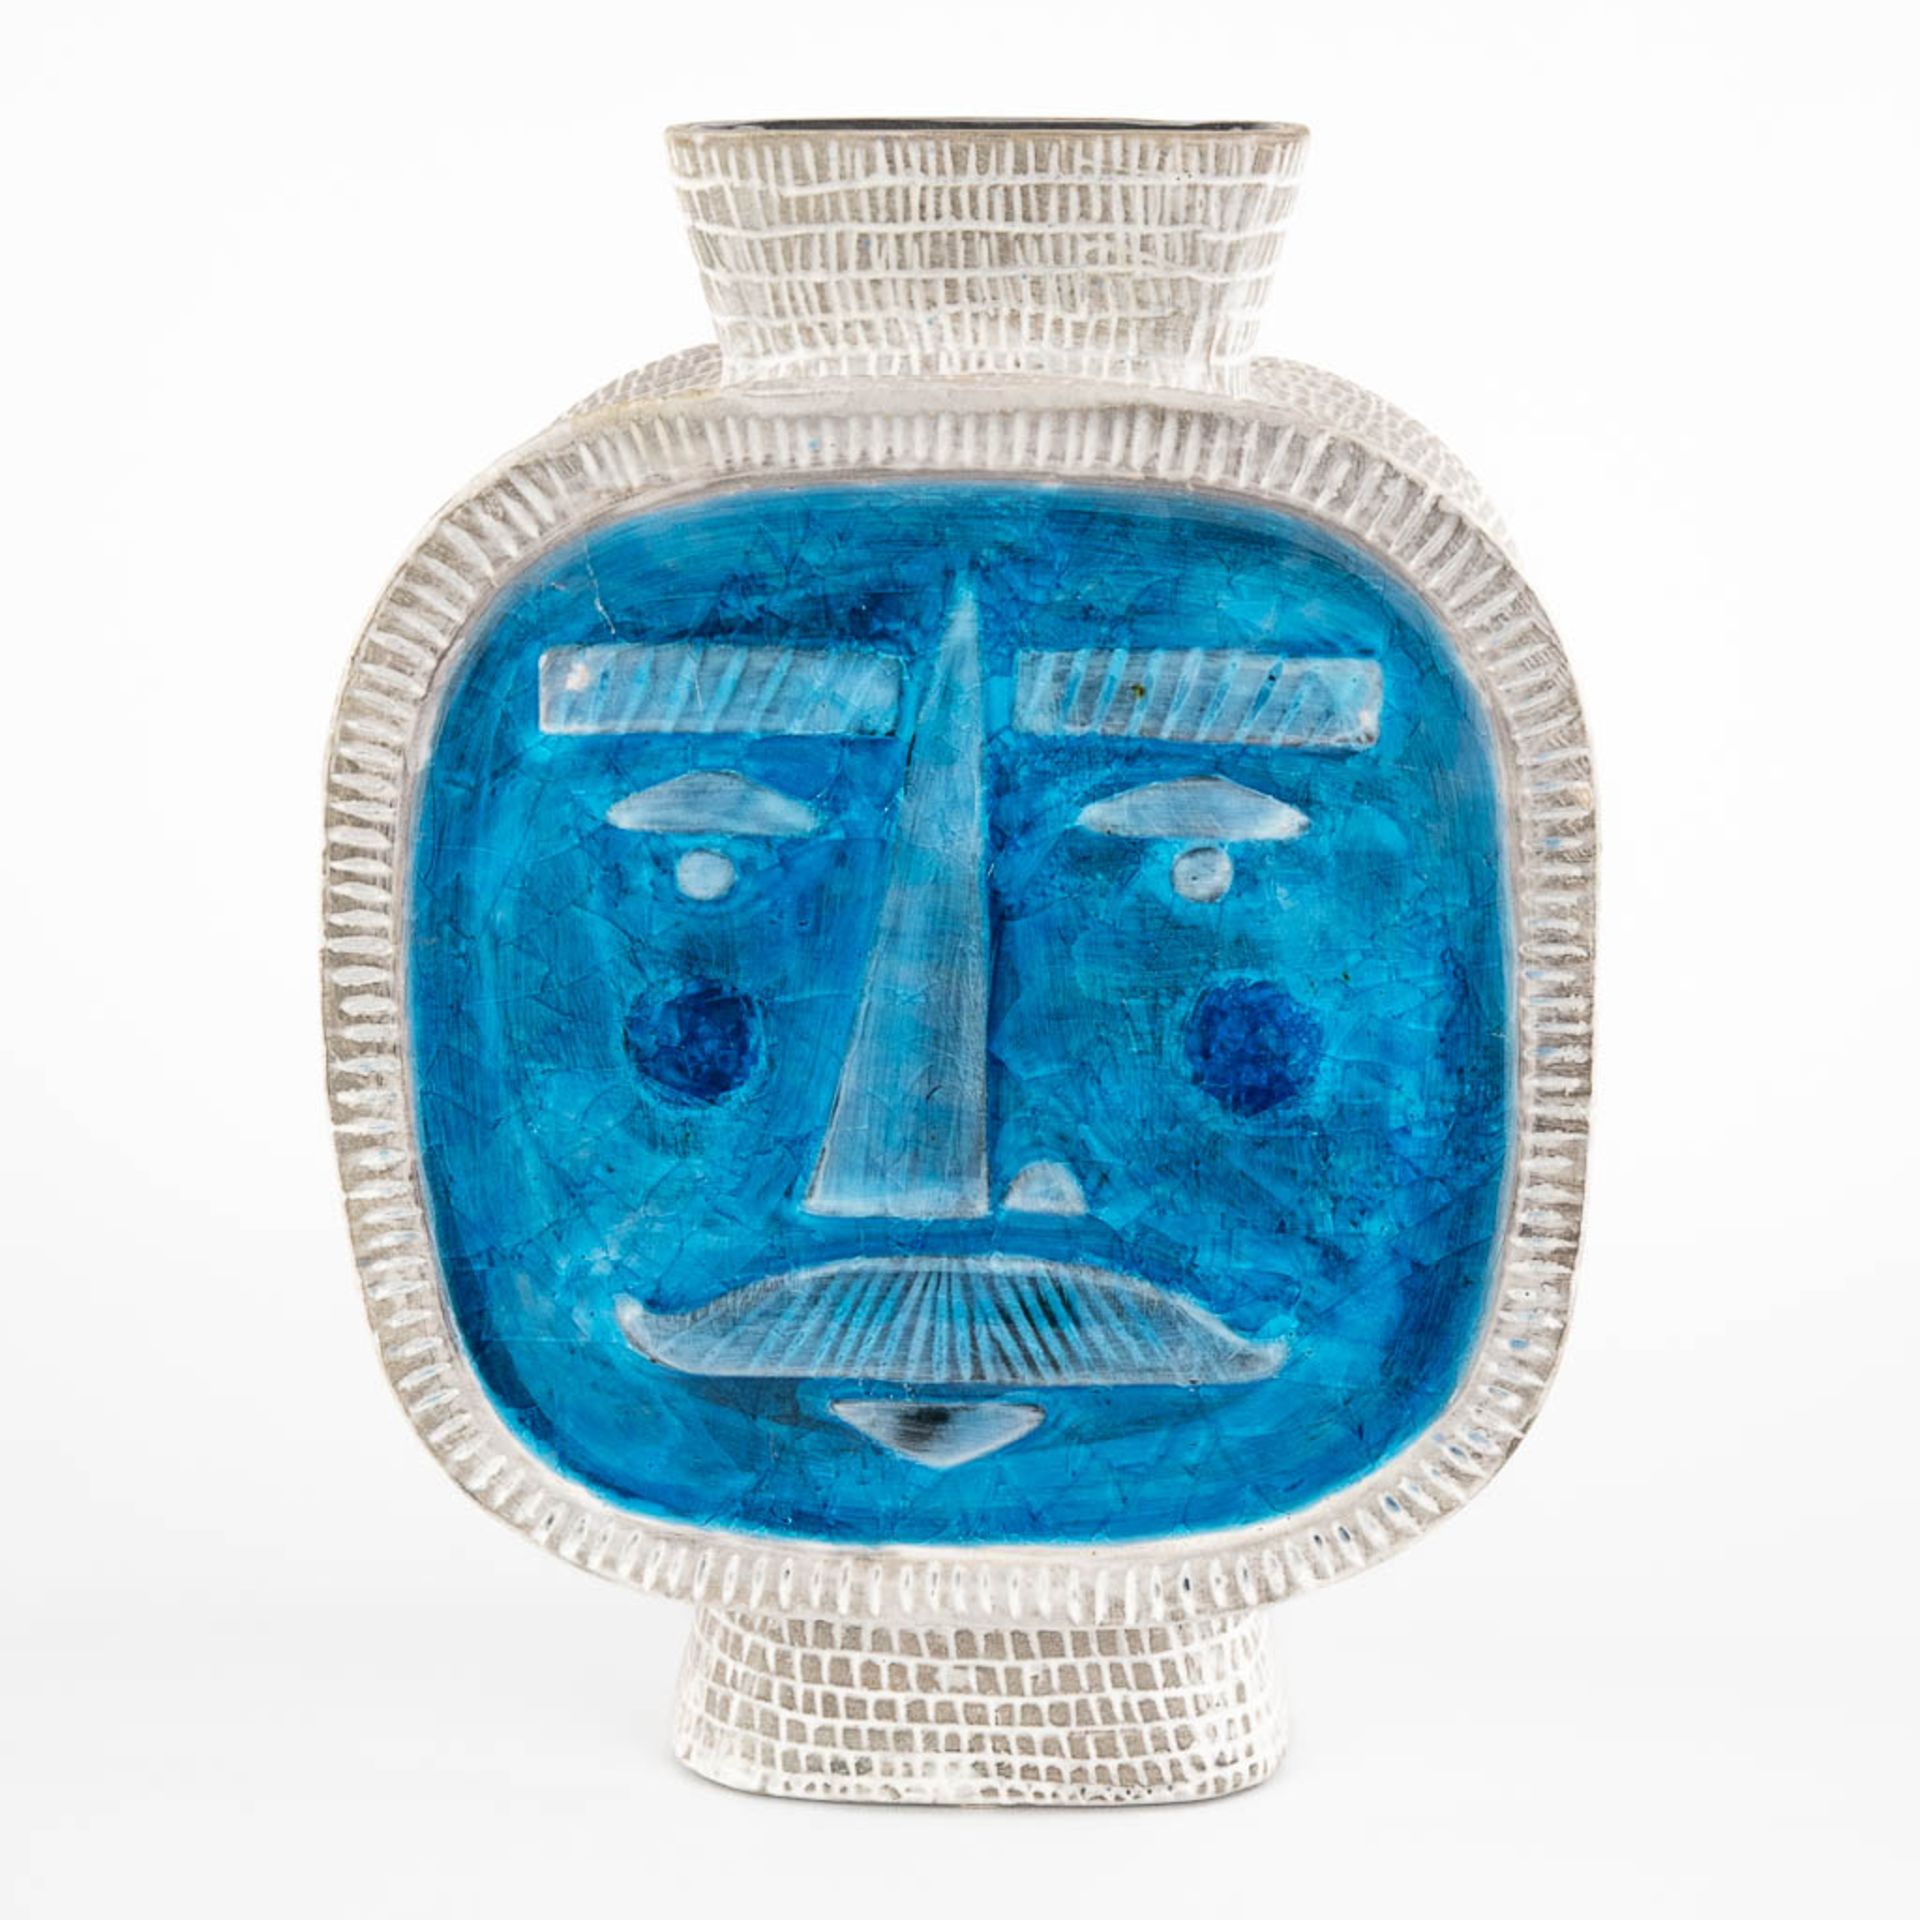 Jonathan ADLER (1966) 'Vase decorated with faces' glazed ceramics. (D:9 x W:18,5 x H:25 cm)